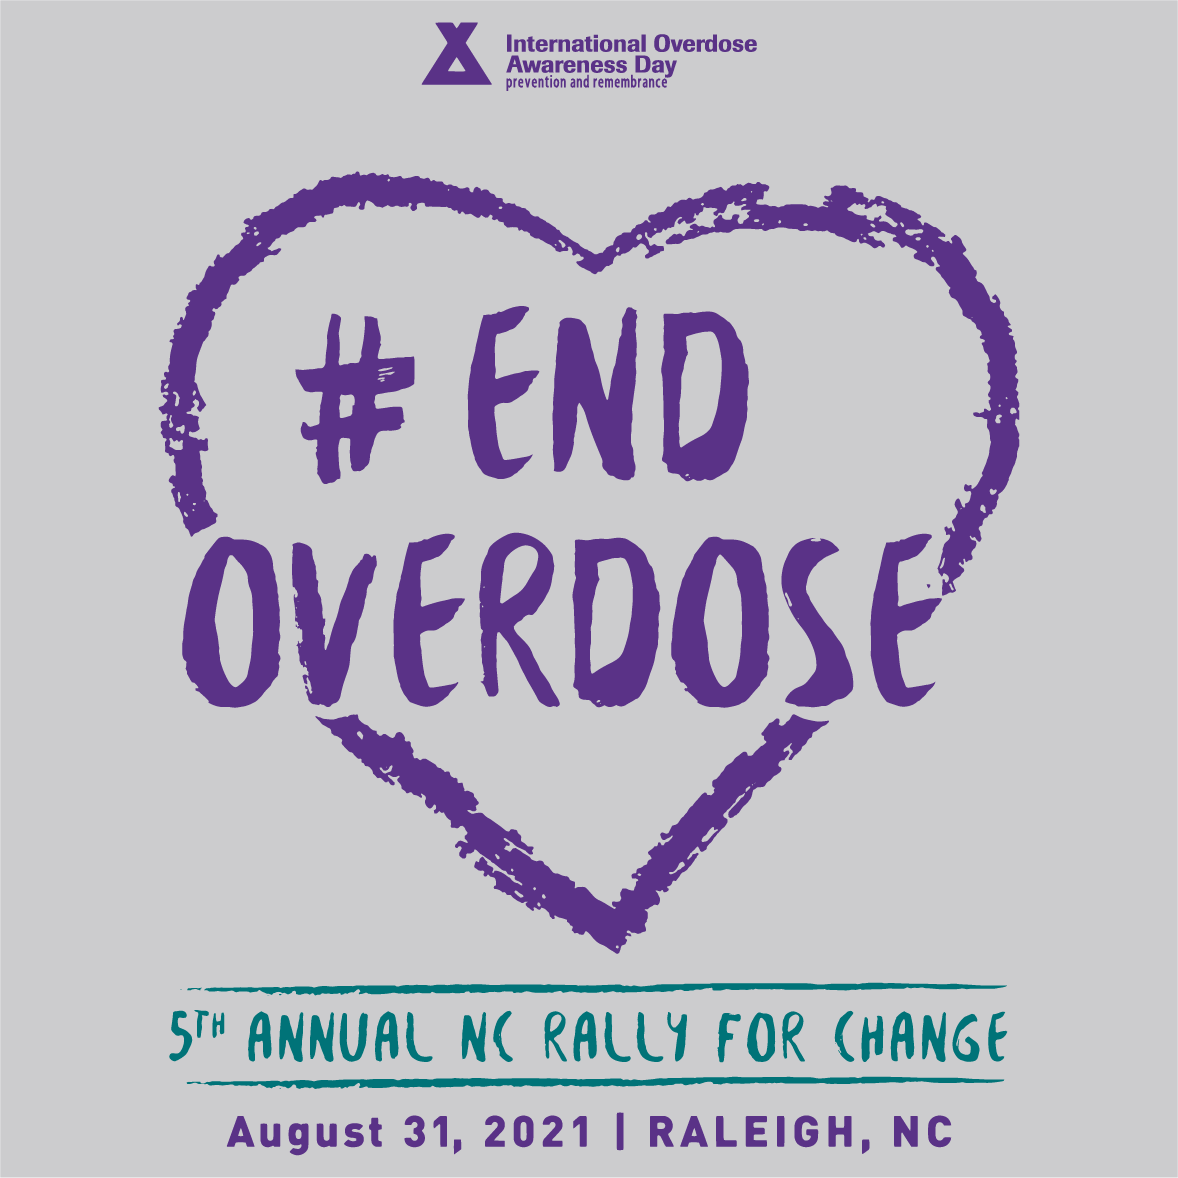 2021 International Overdose Awareness Day - North Carolina Rally for Change - Raleigh, NC shirt design - zoomed